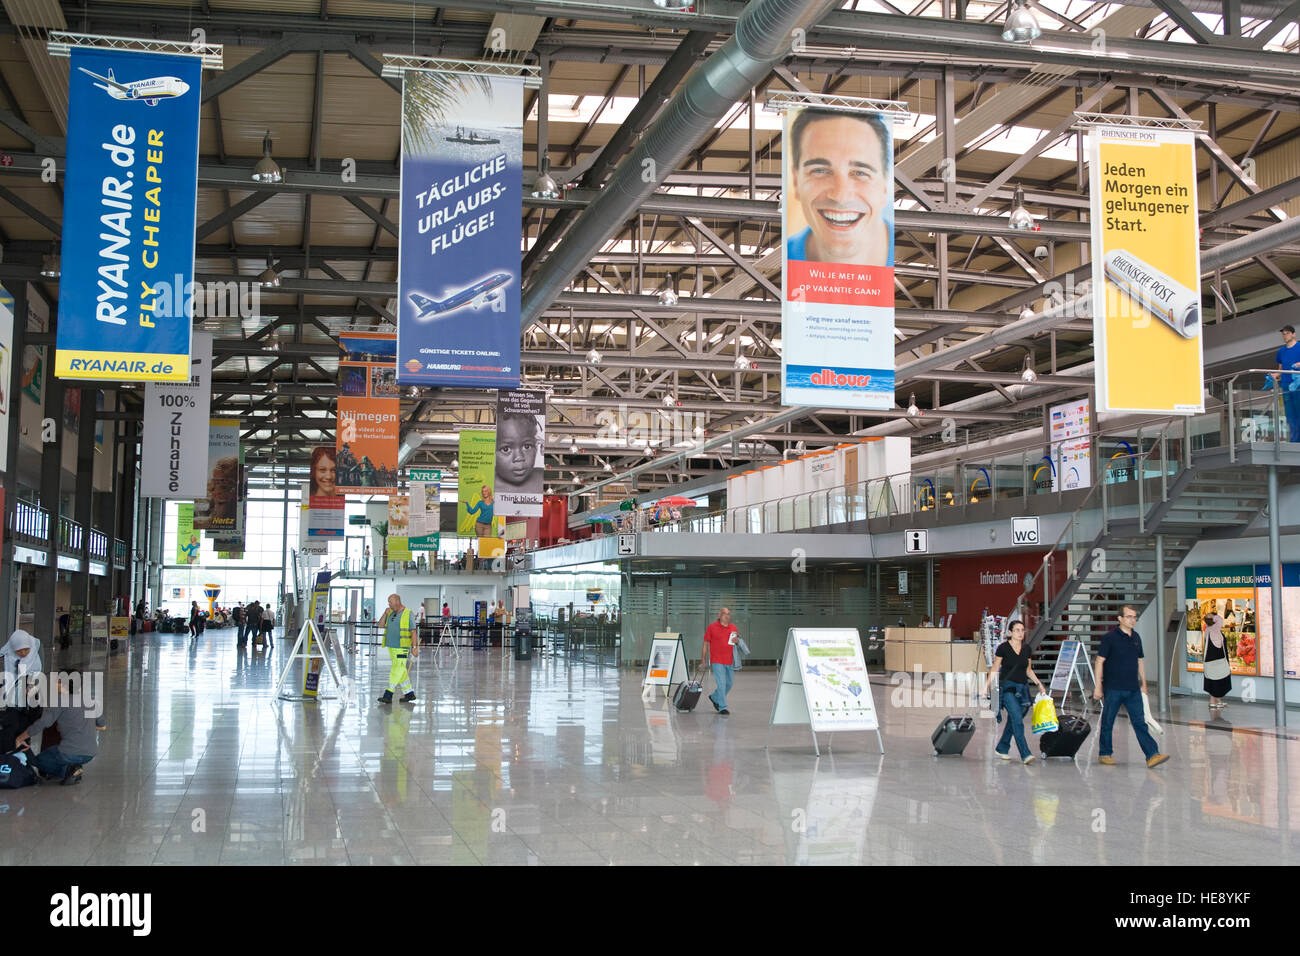 Europe, Germany, North Rhine-Westphalia, Lower Rhine Region, Airport Weeze, Terminal. Stock Photo